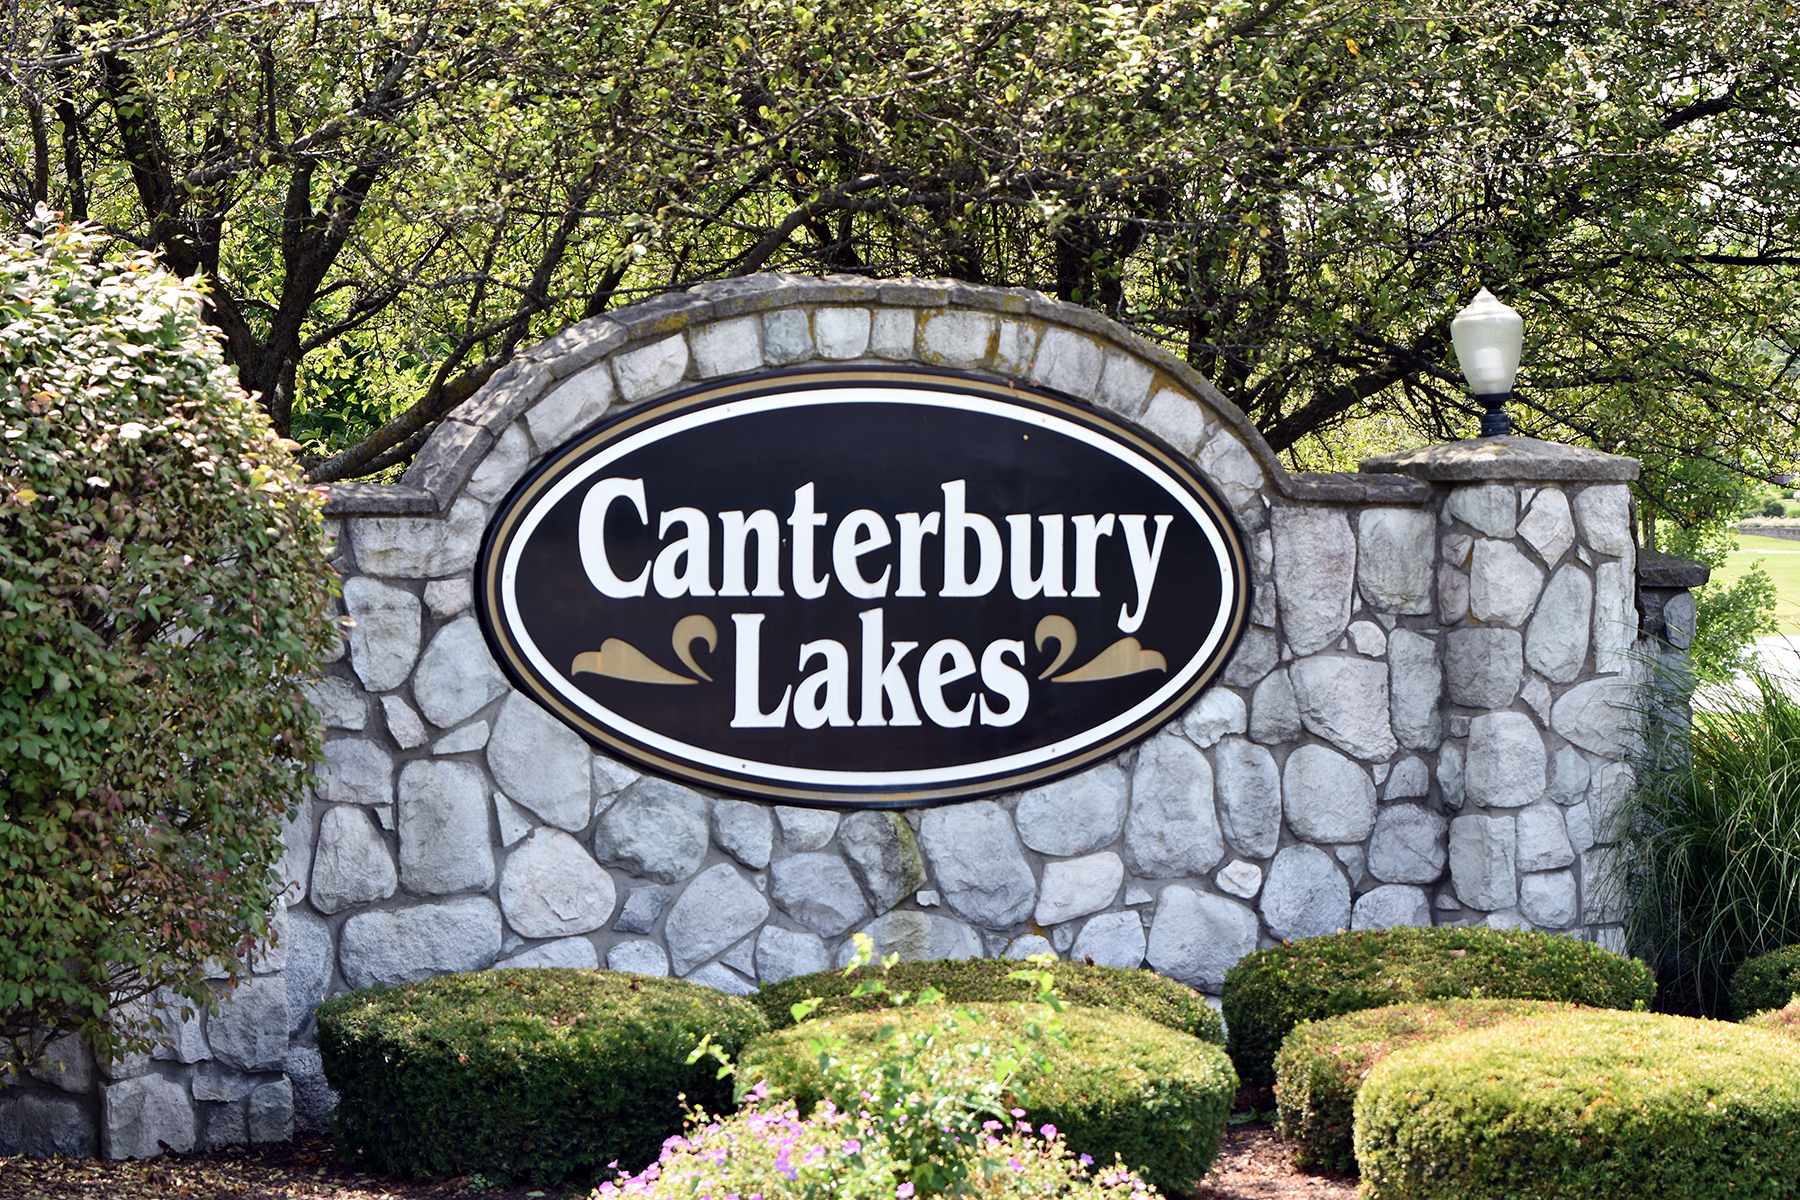 photo of canterbury lakes entrance sign